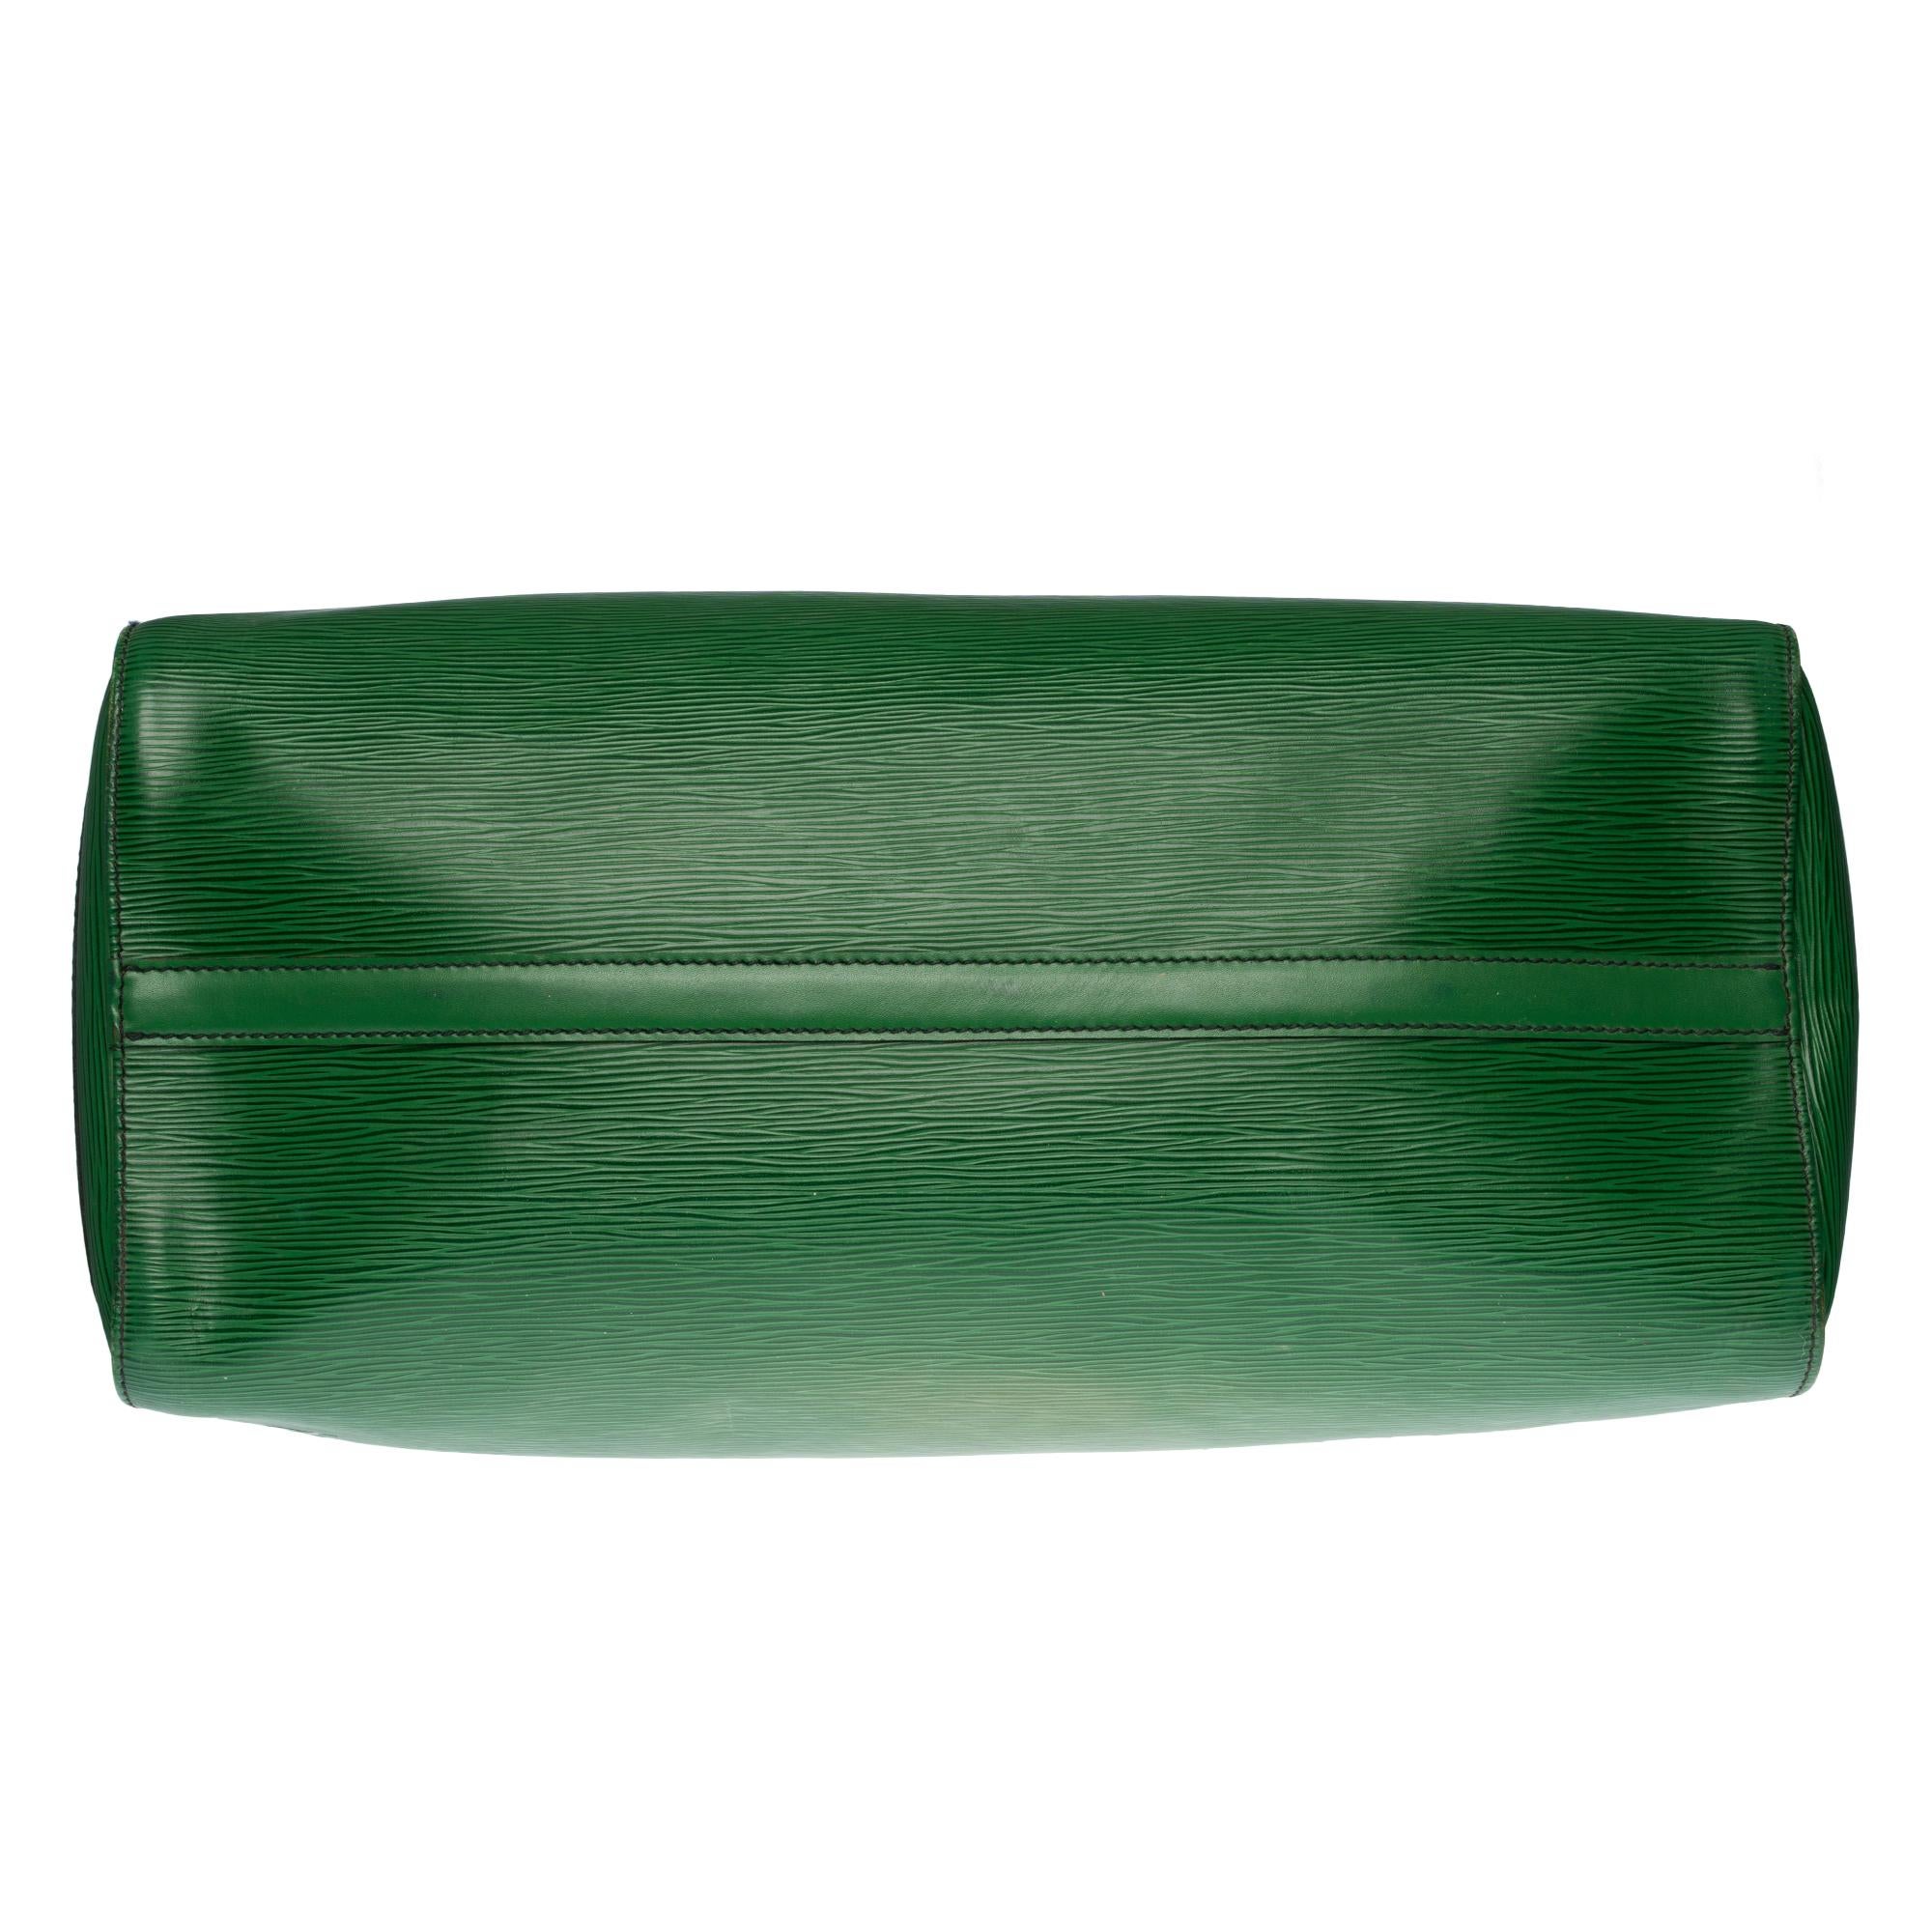 Stunning Louis Vuitton Speedy 40 handbag in green épi leather 4